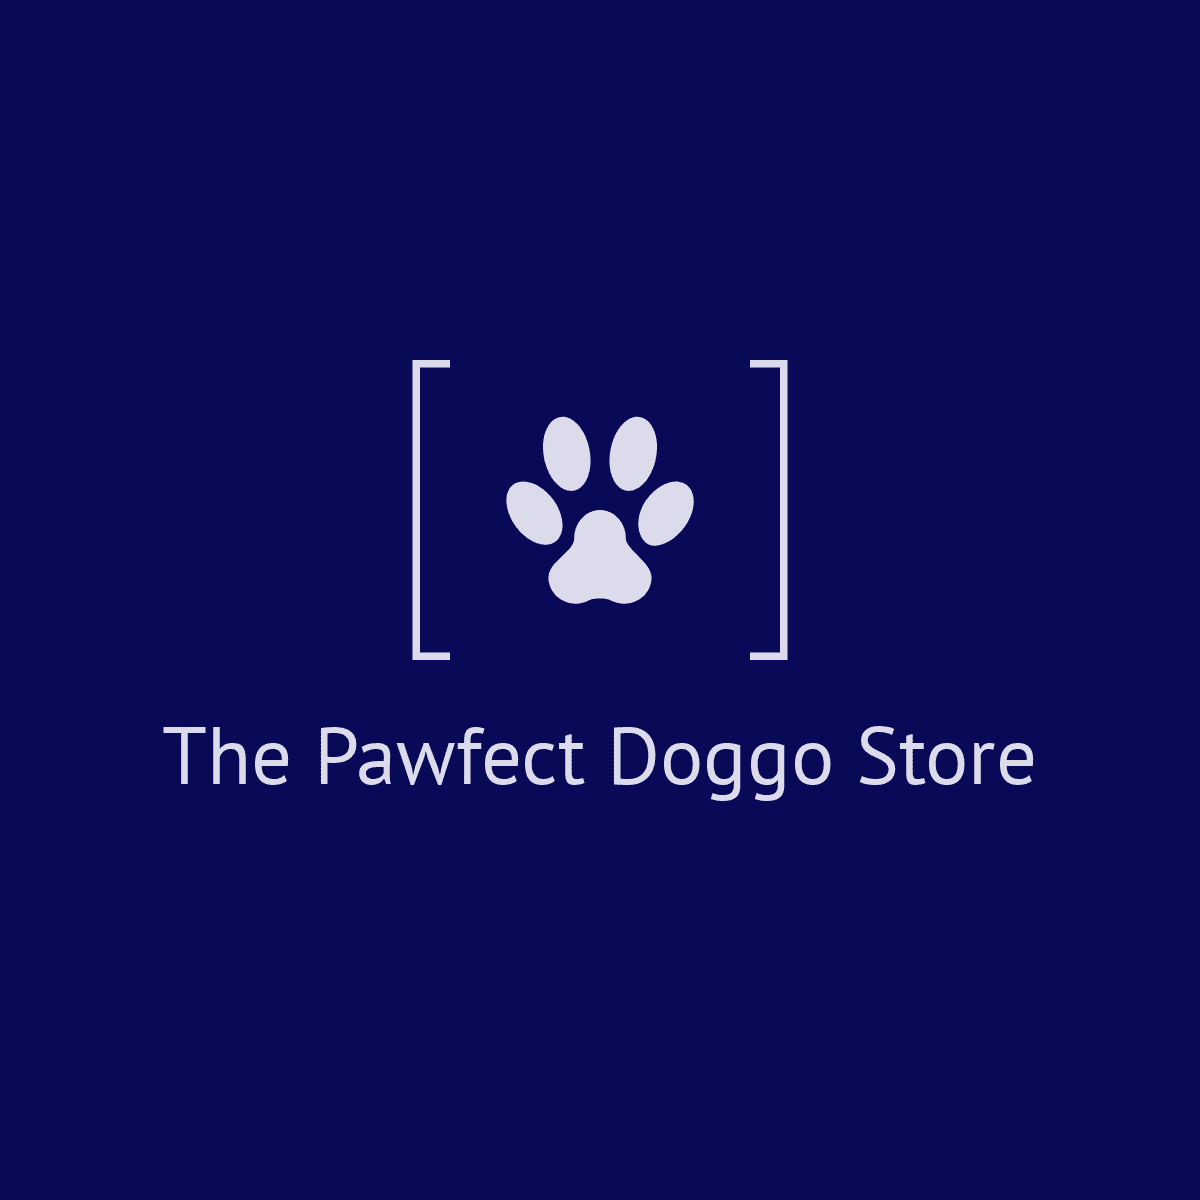 The Pawfect Doggo Store